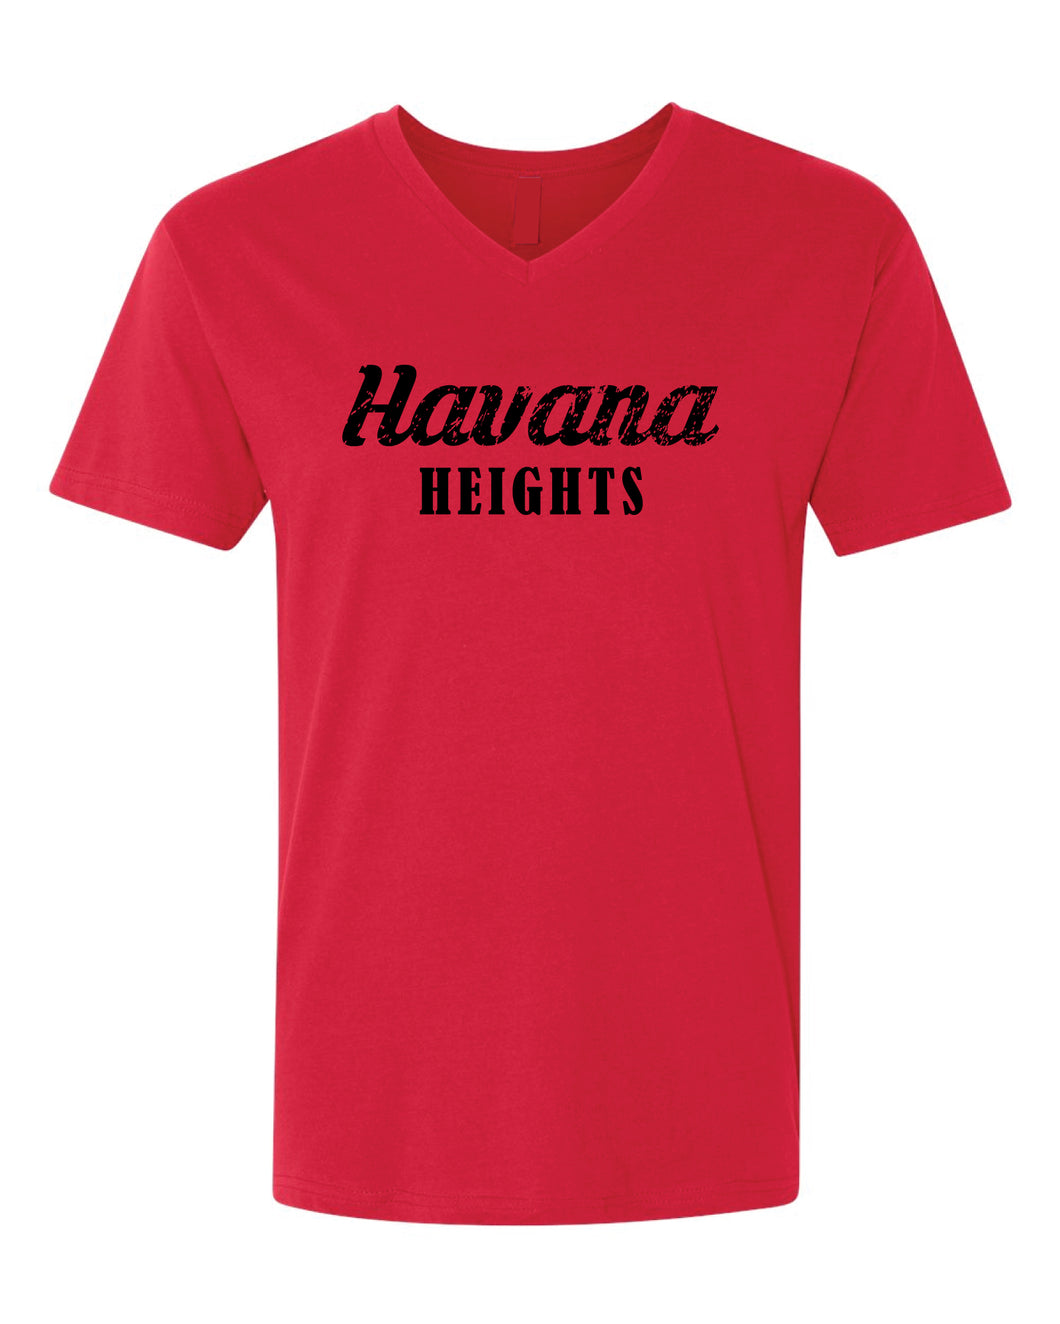 Havana Heights Cotton Short Sleeve V - Red - 5KounT2018